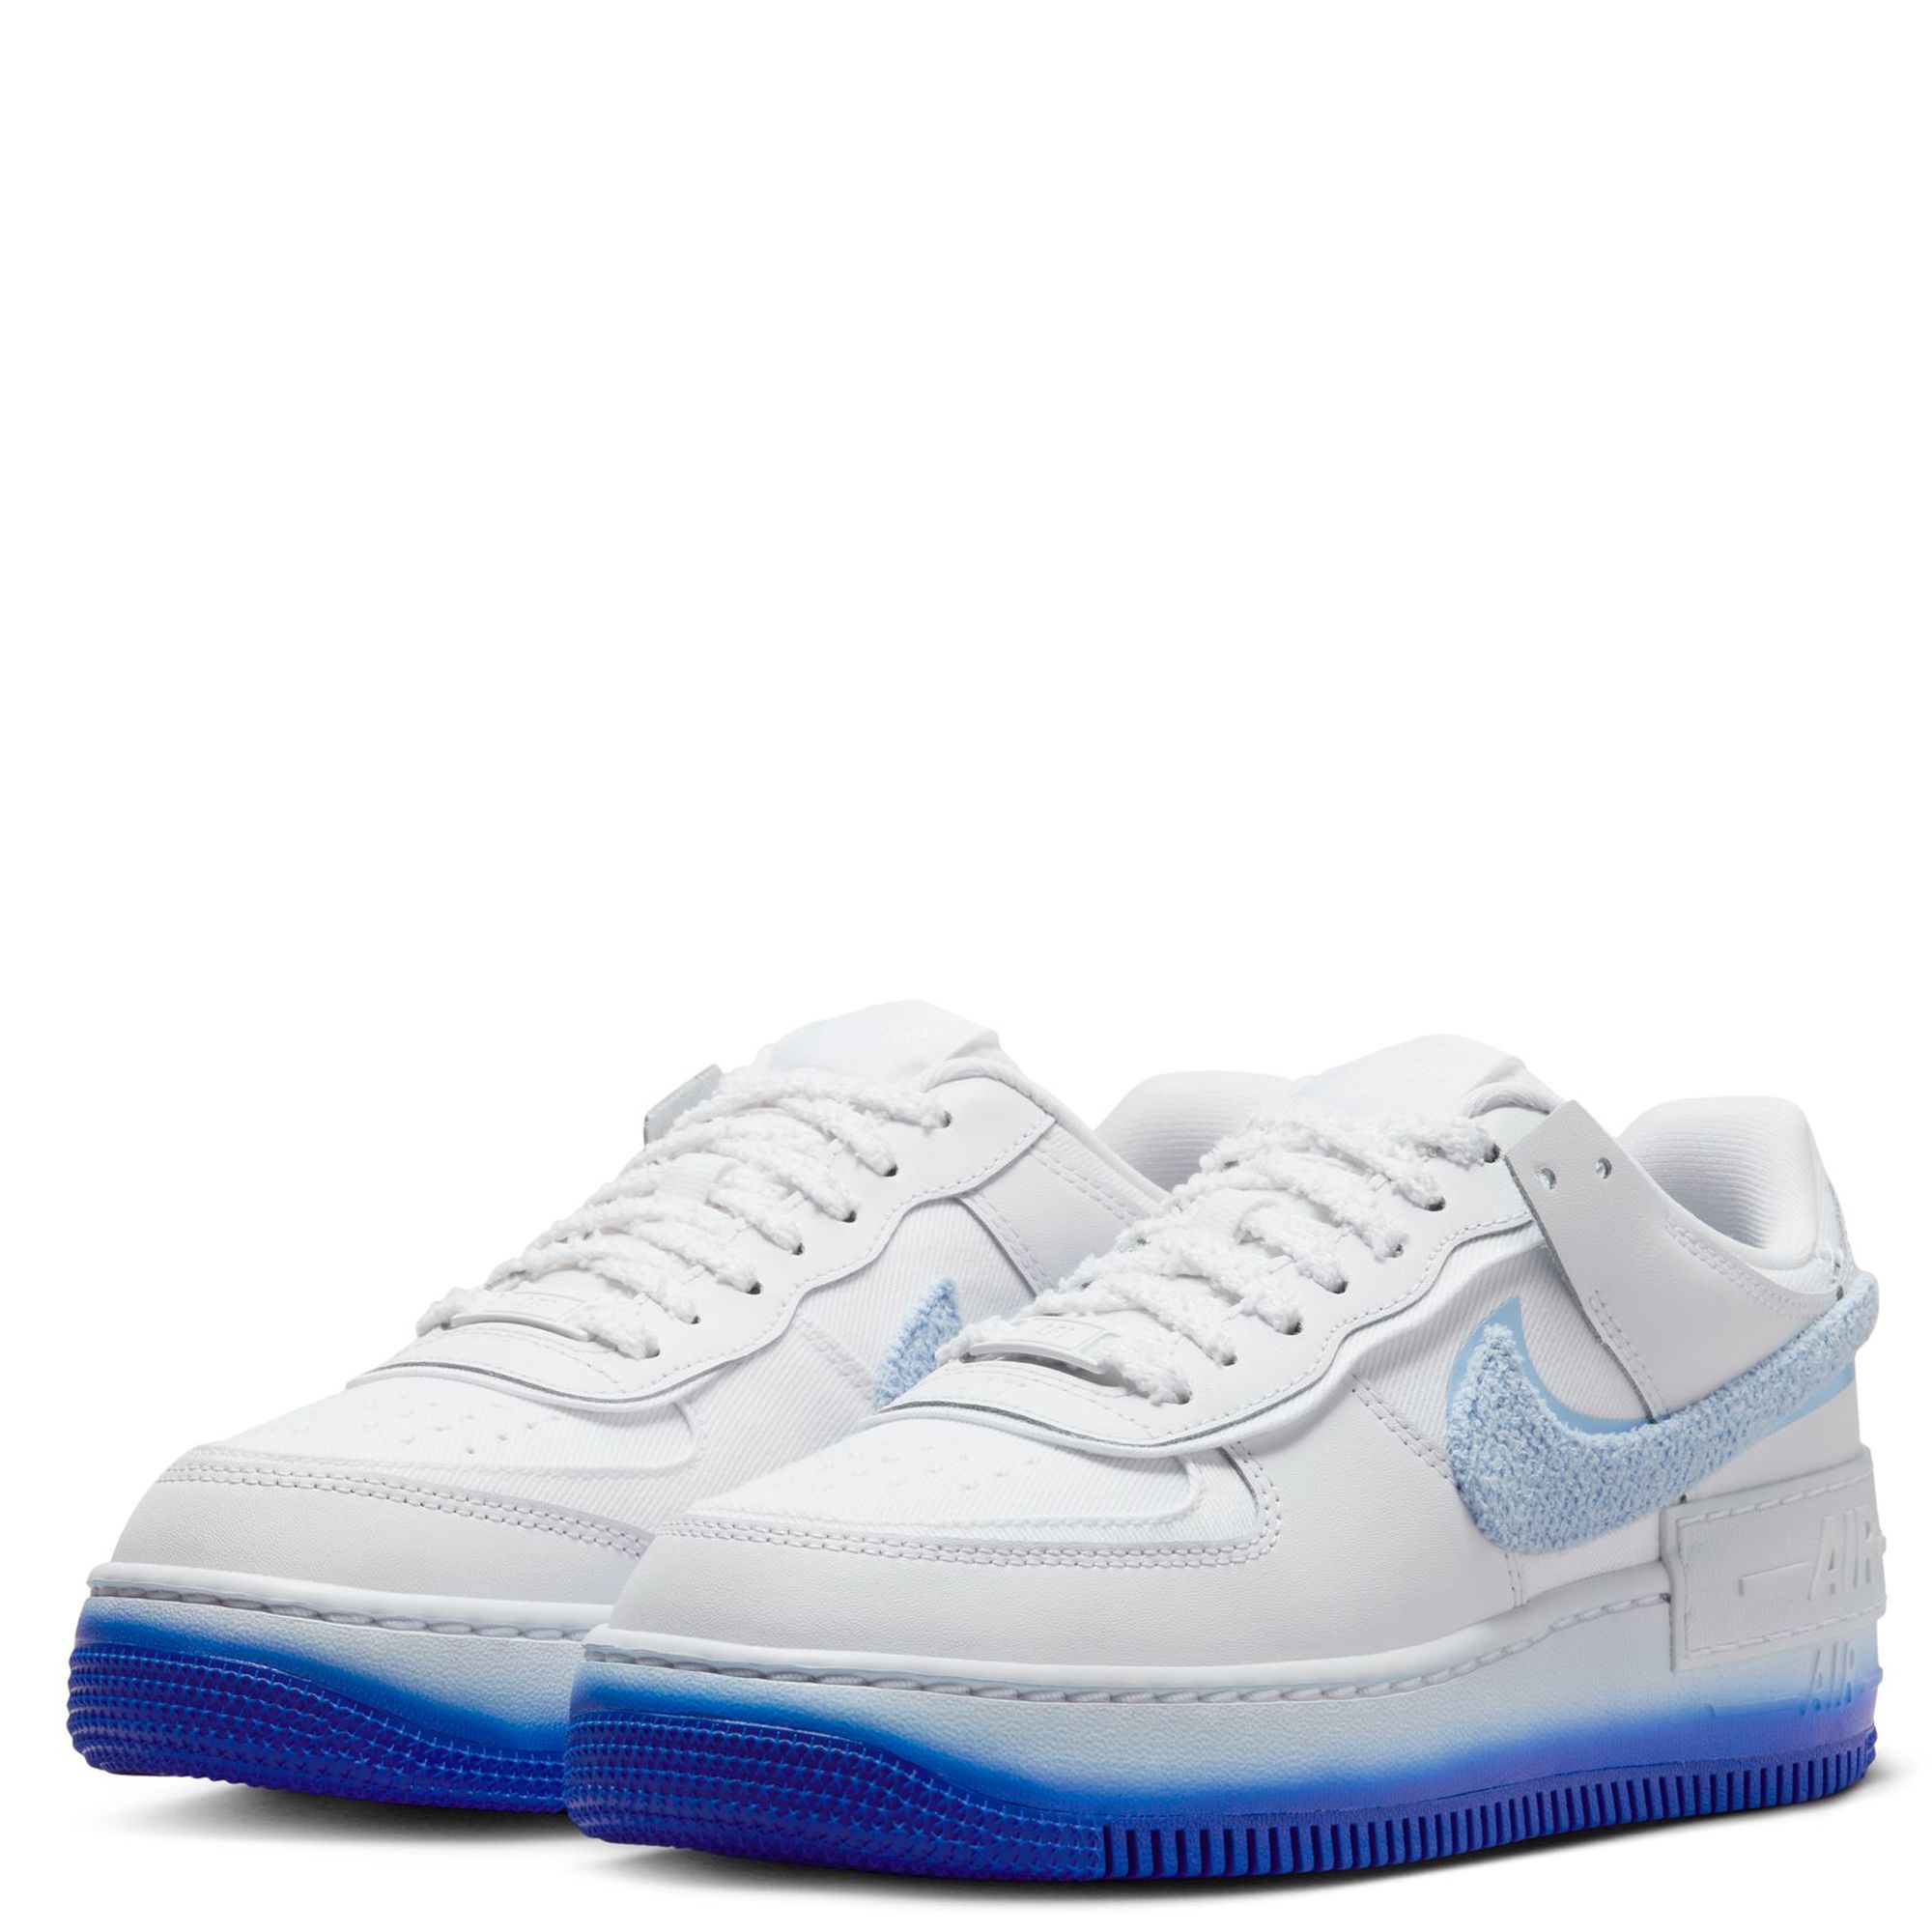 Nike Air Force 1 Low Sail Platinum Tint Mens Lifestyle Shoes White